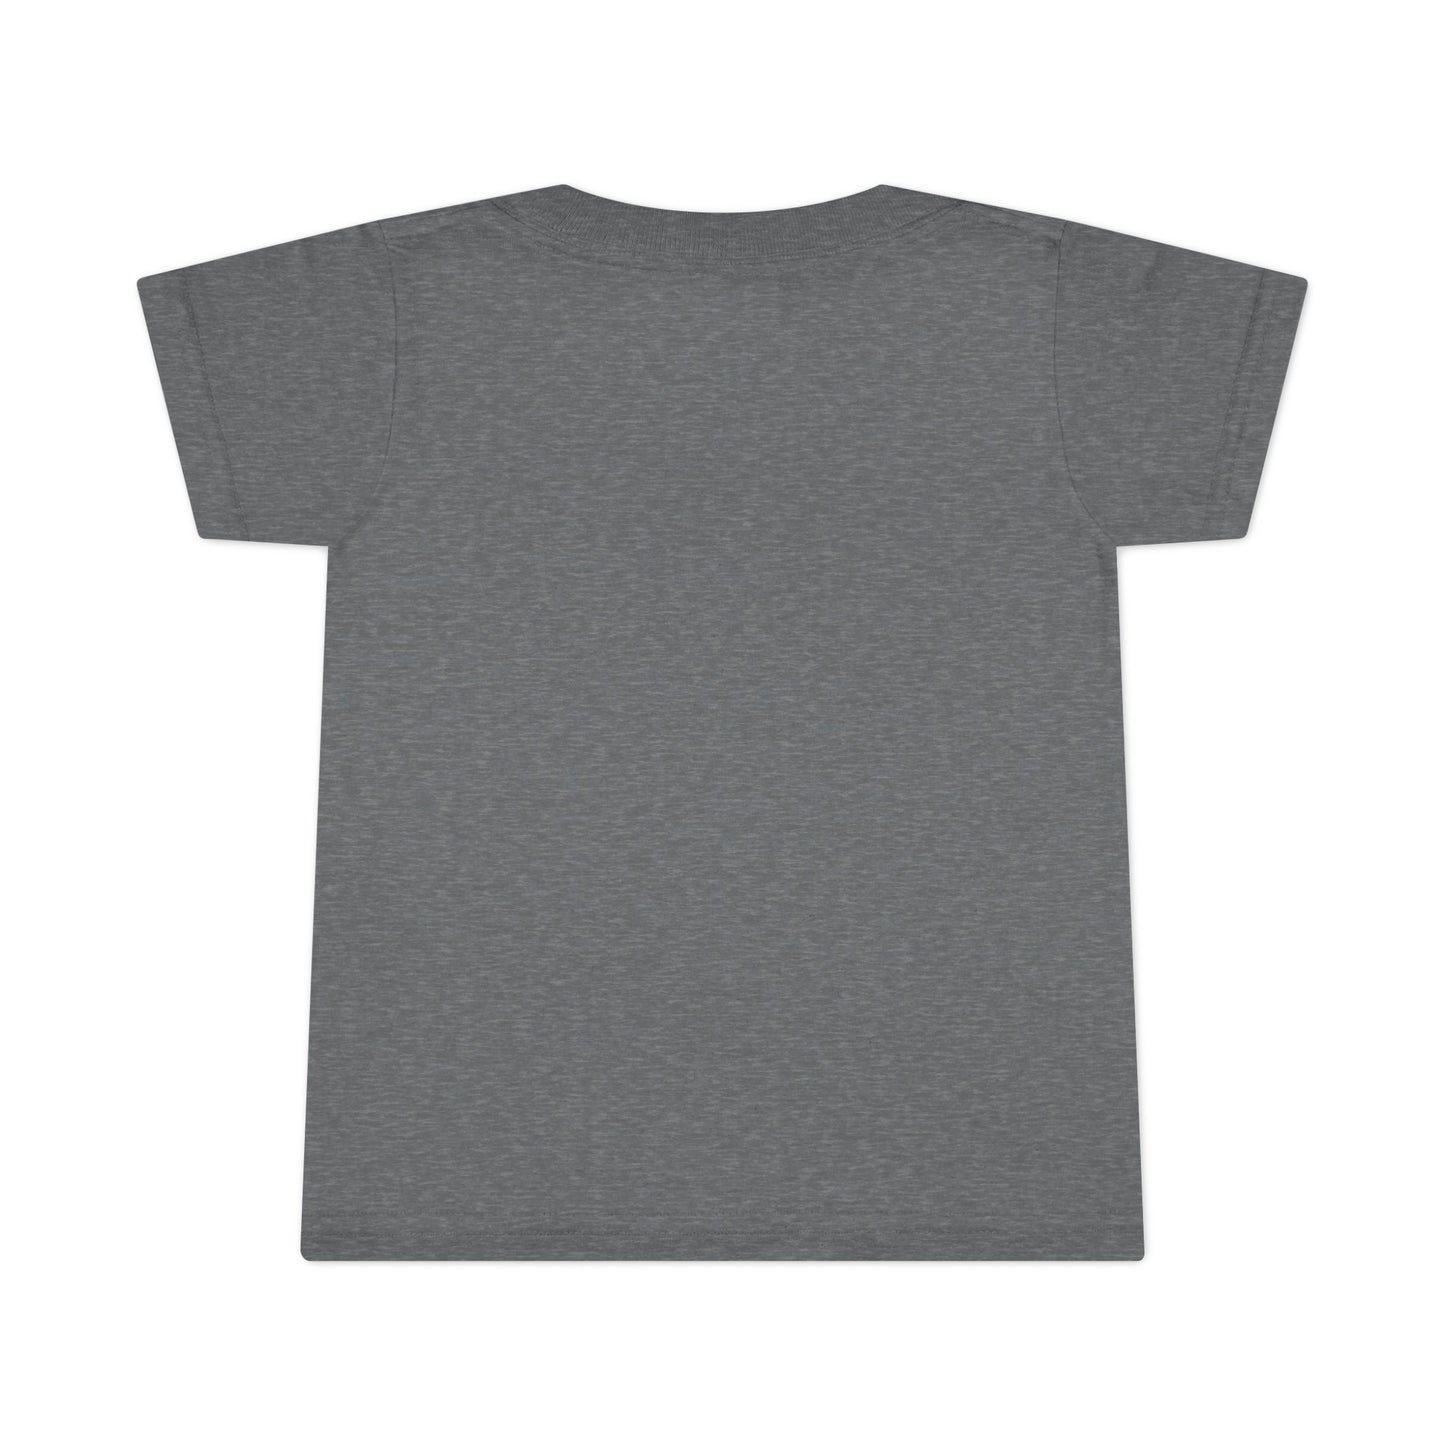 Family - Classic Brooklyn Tech - Toddler Ringspun Cotton T-Shirt